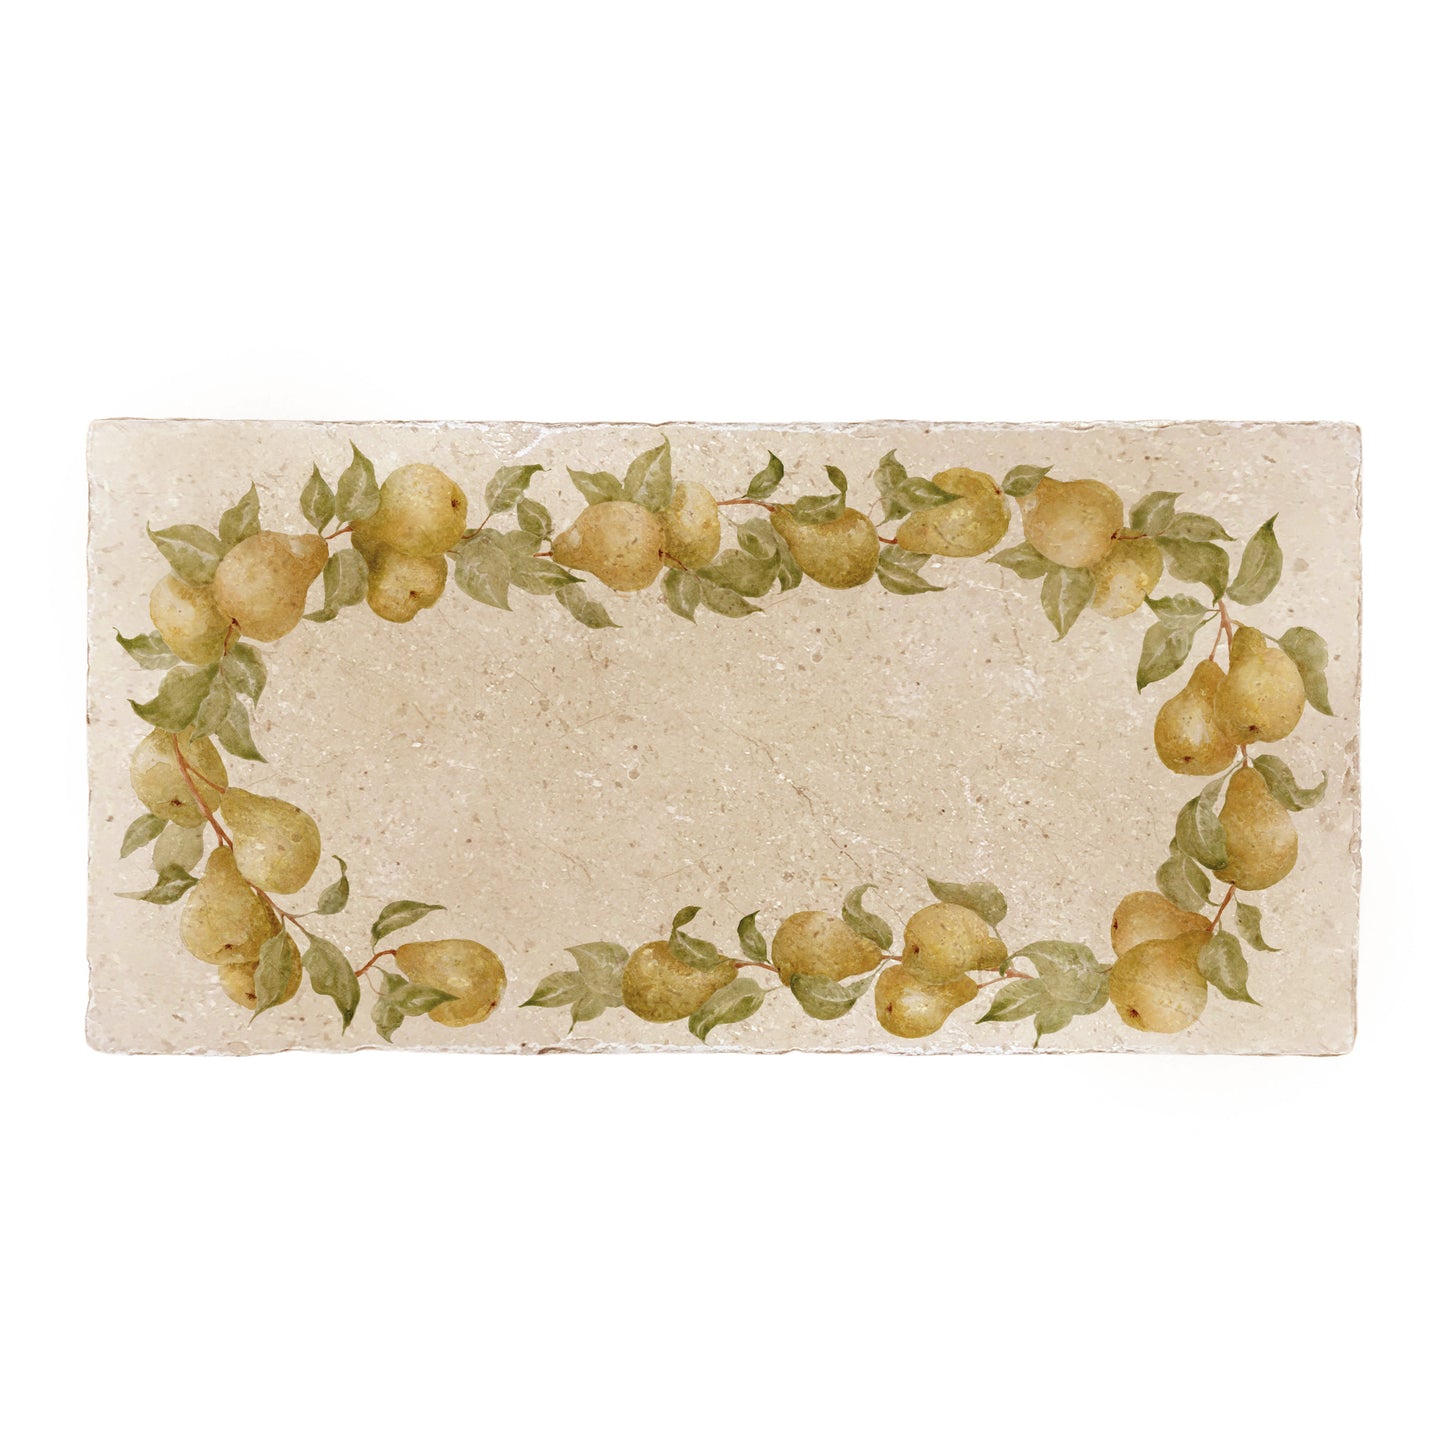 A rectangular marble sharing platter, featuring a watercolour pear wreath design that frames the platter.